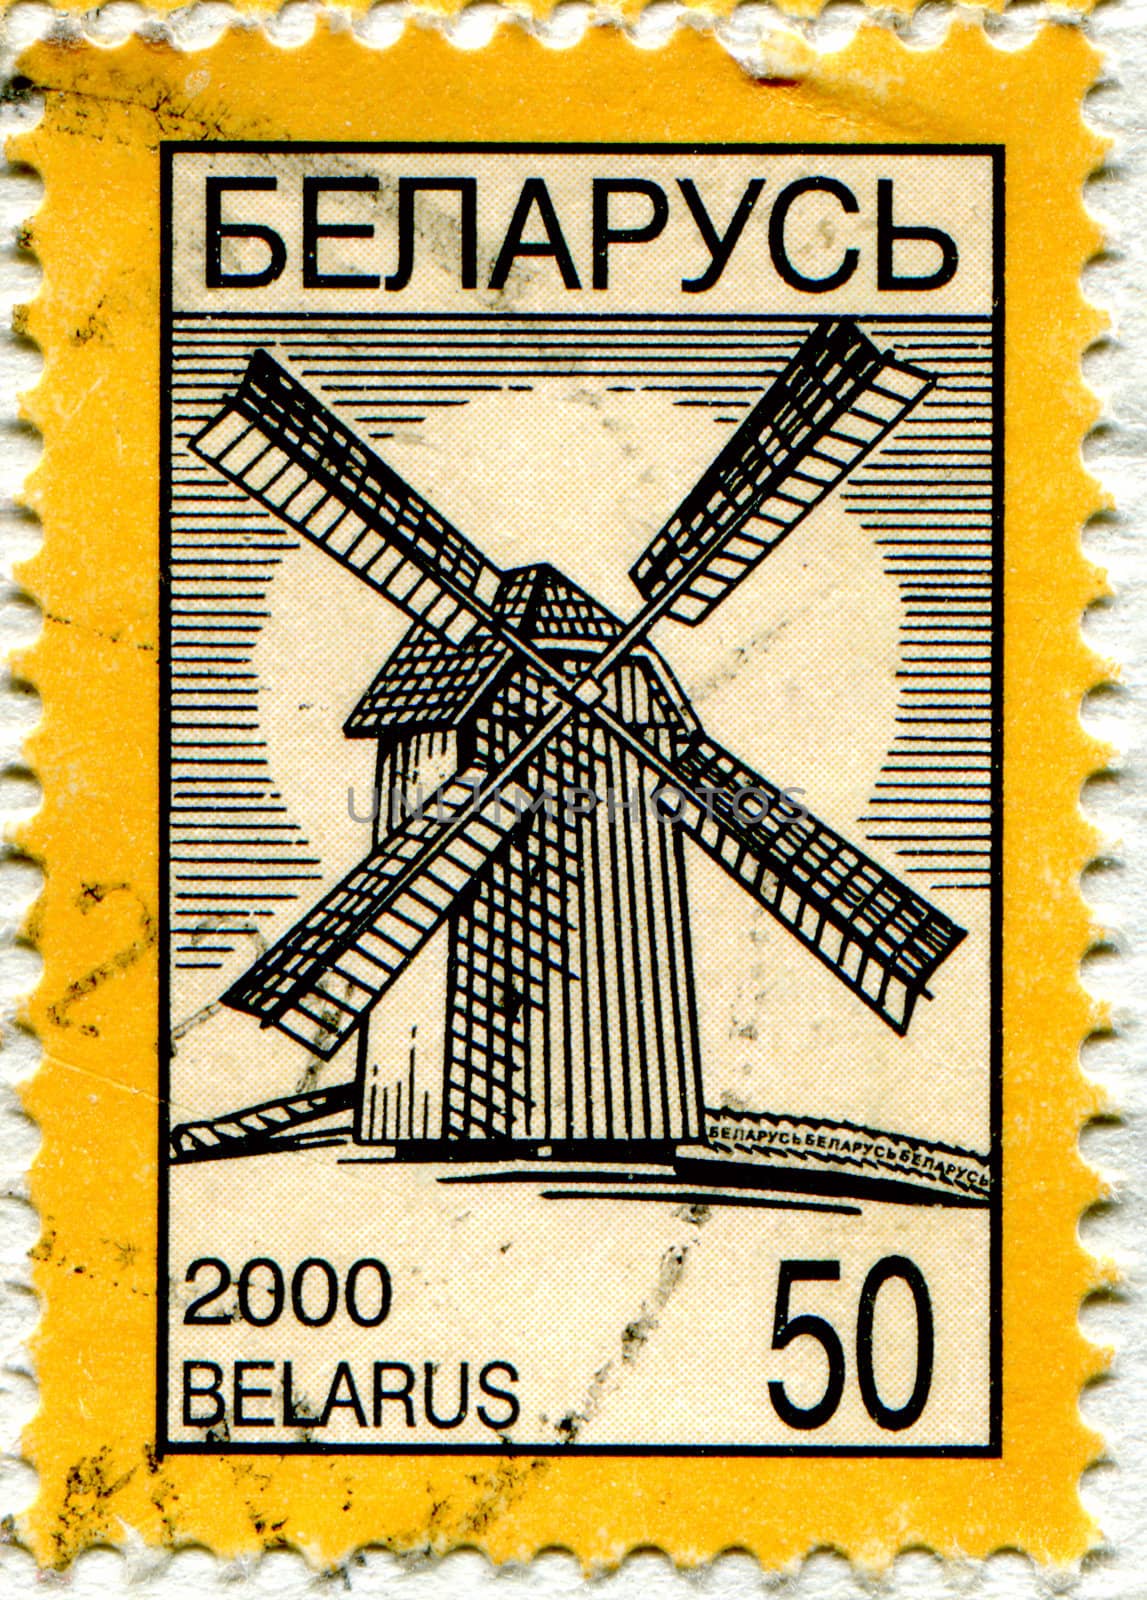 BELARUS - CIRCA 2000: stamp printed by Belarus, shows vintage townhouse, circa 2000.